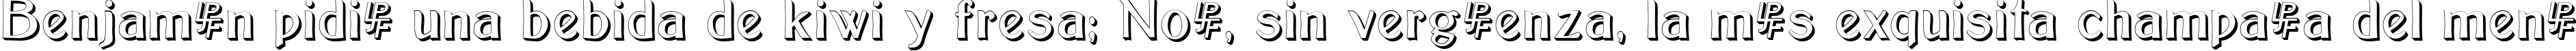 Пример написания шрифтом Bolton Sans Embossed текста на испанском